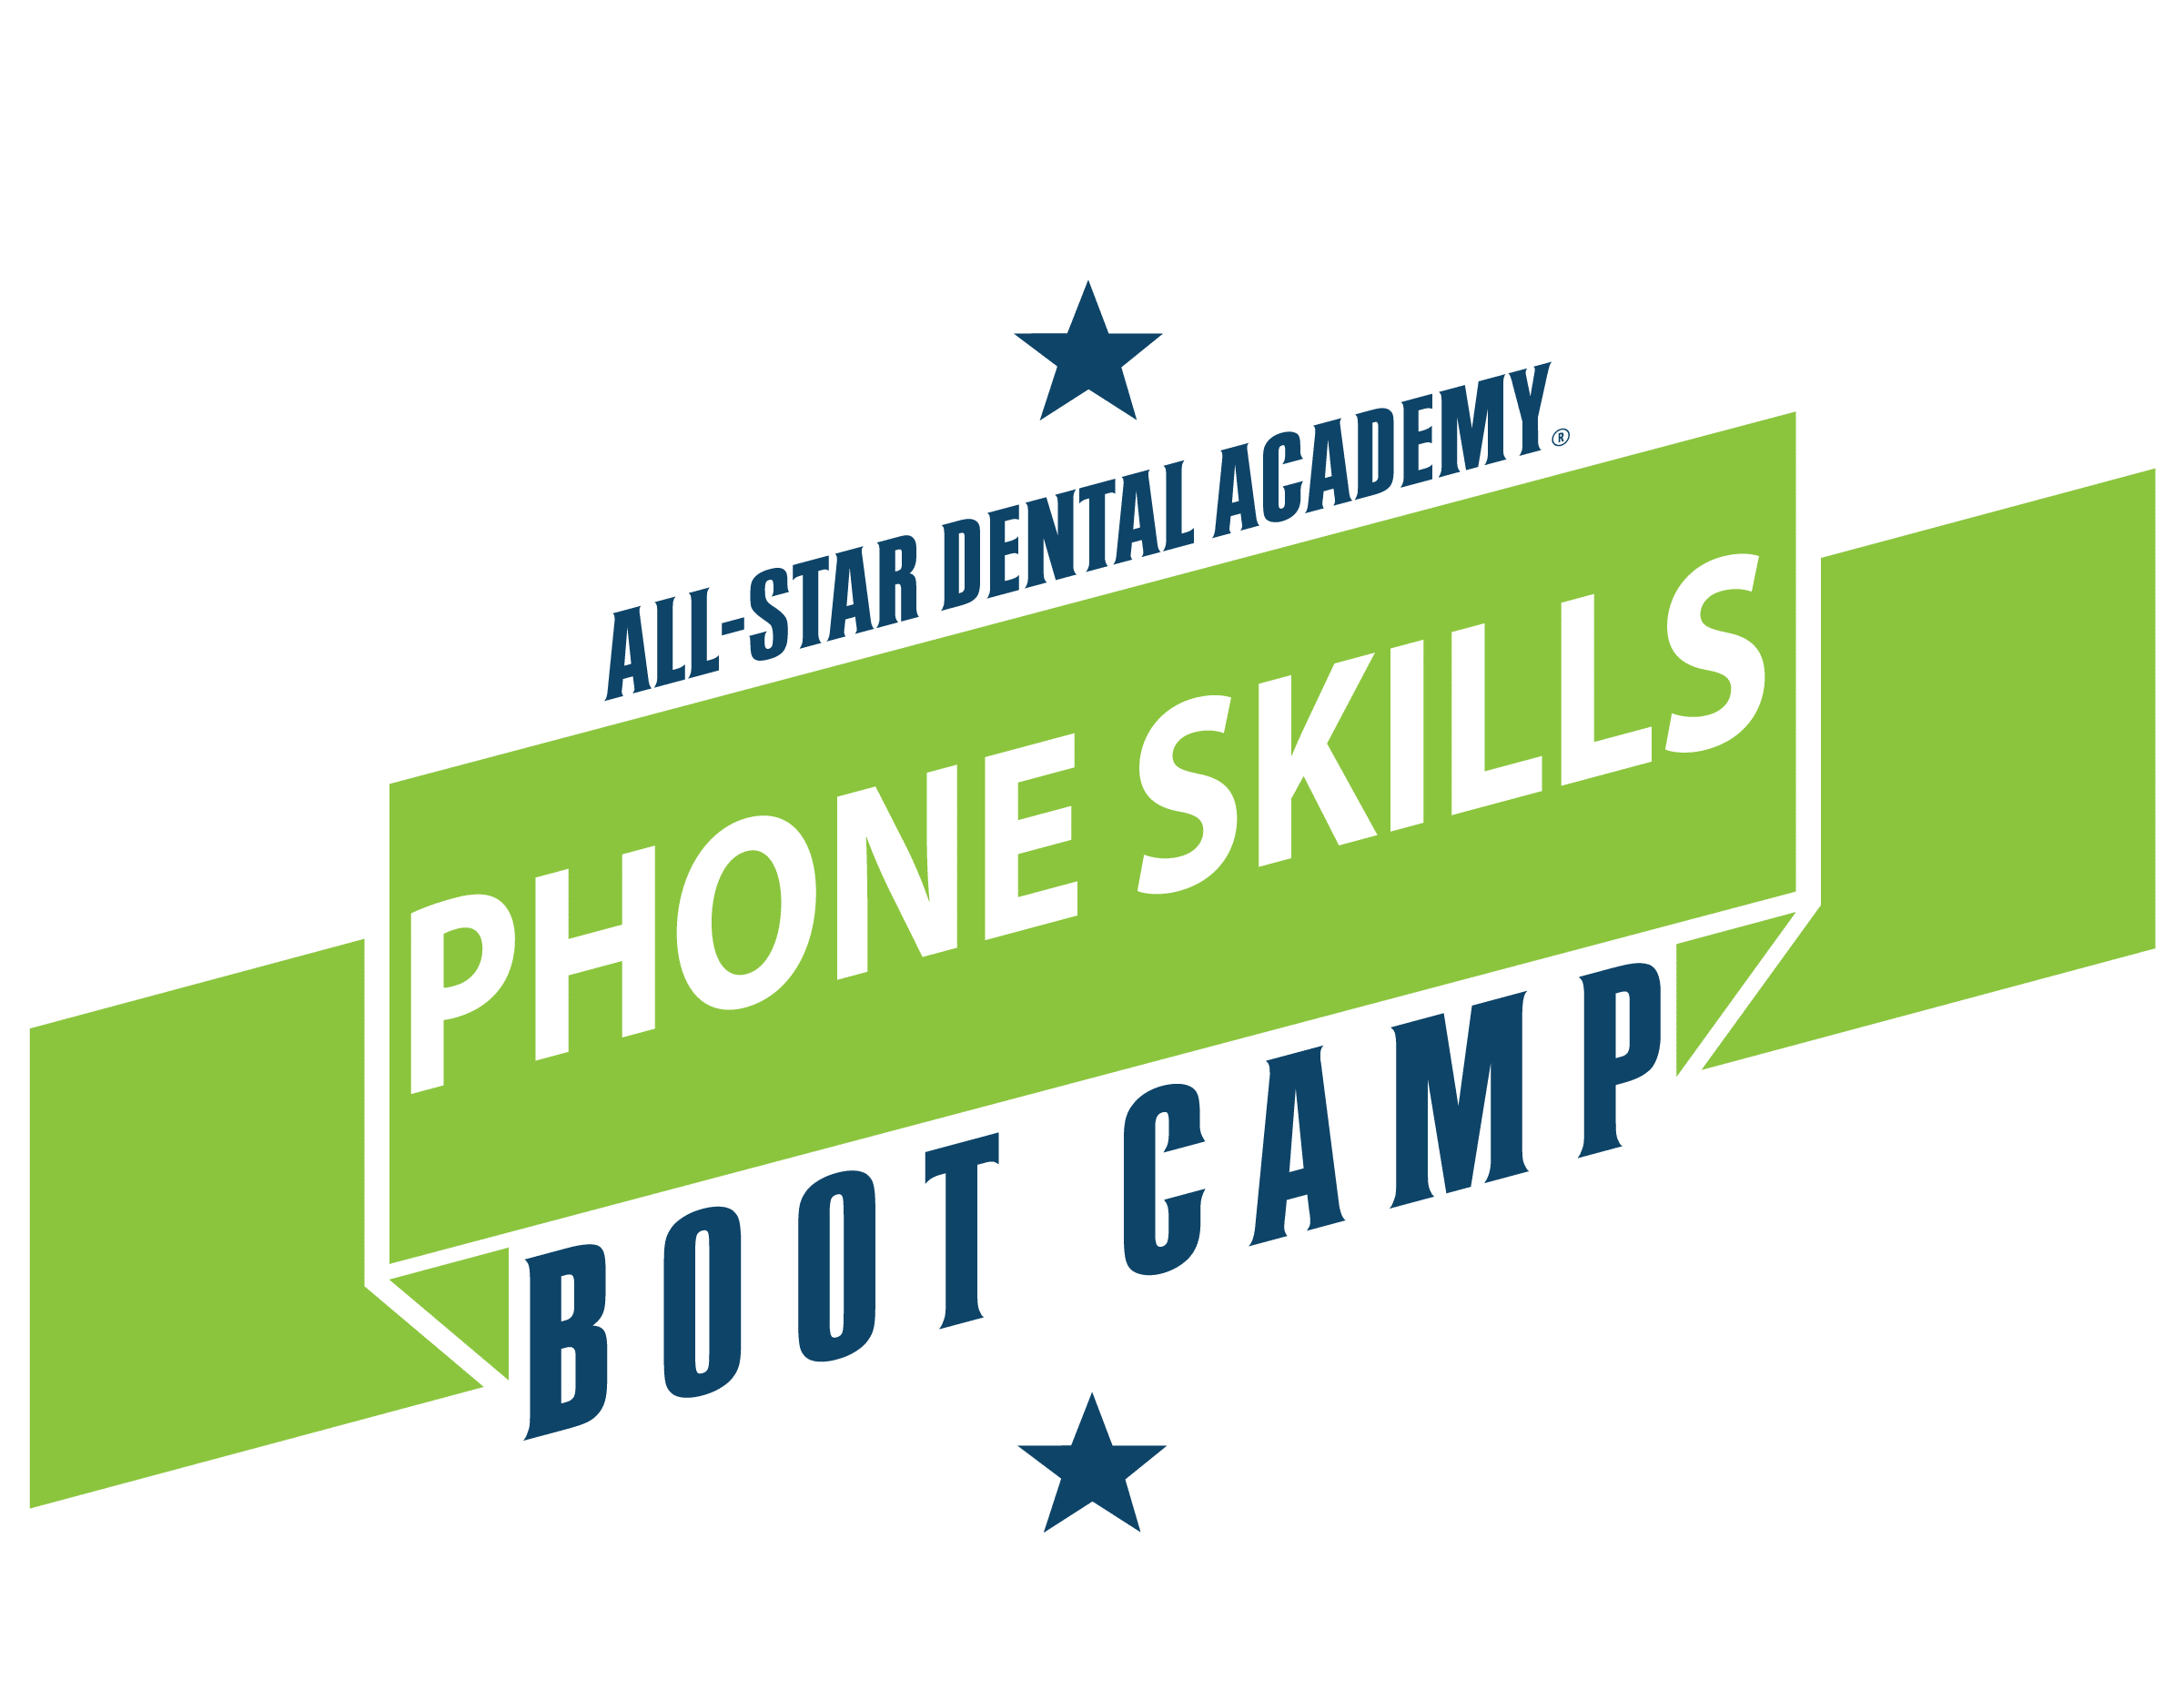 Phone Skills Logo Green, All-Star Dental Academy